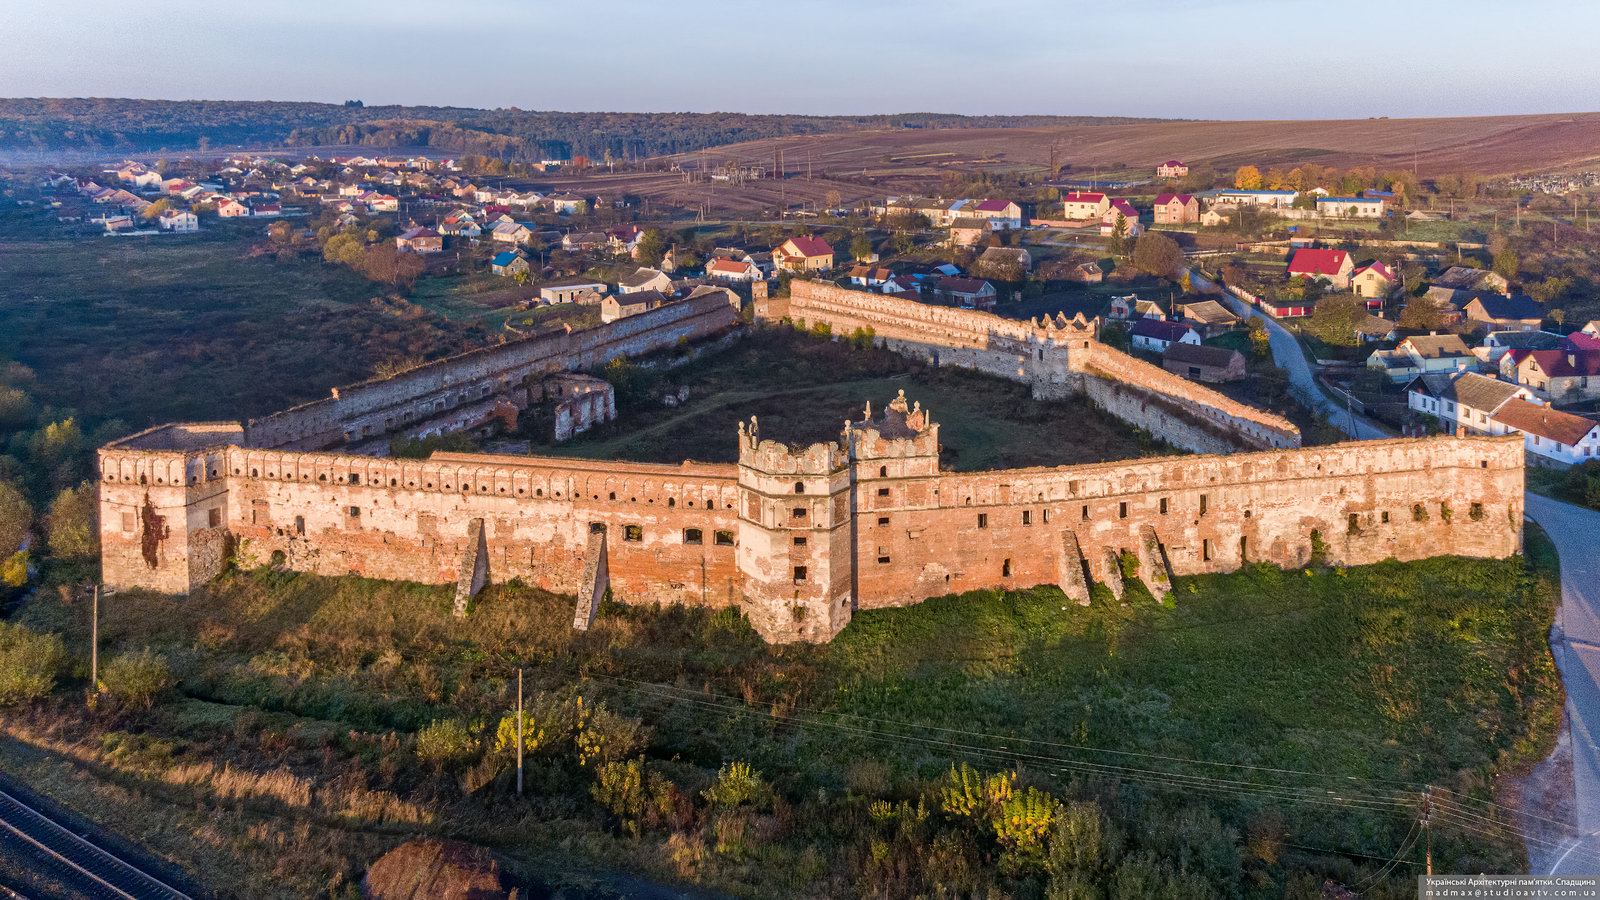 The largest medieval fortress in Ukraine · Ukraine travel blog